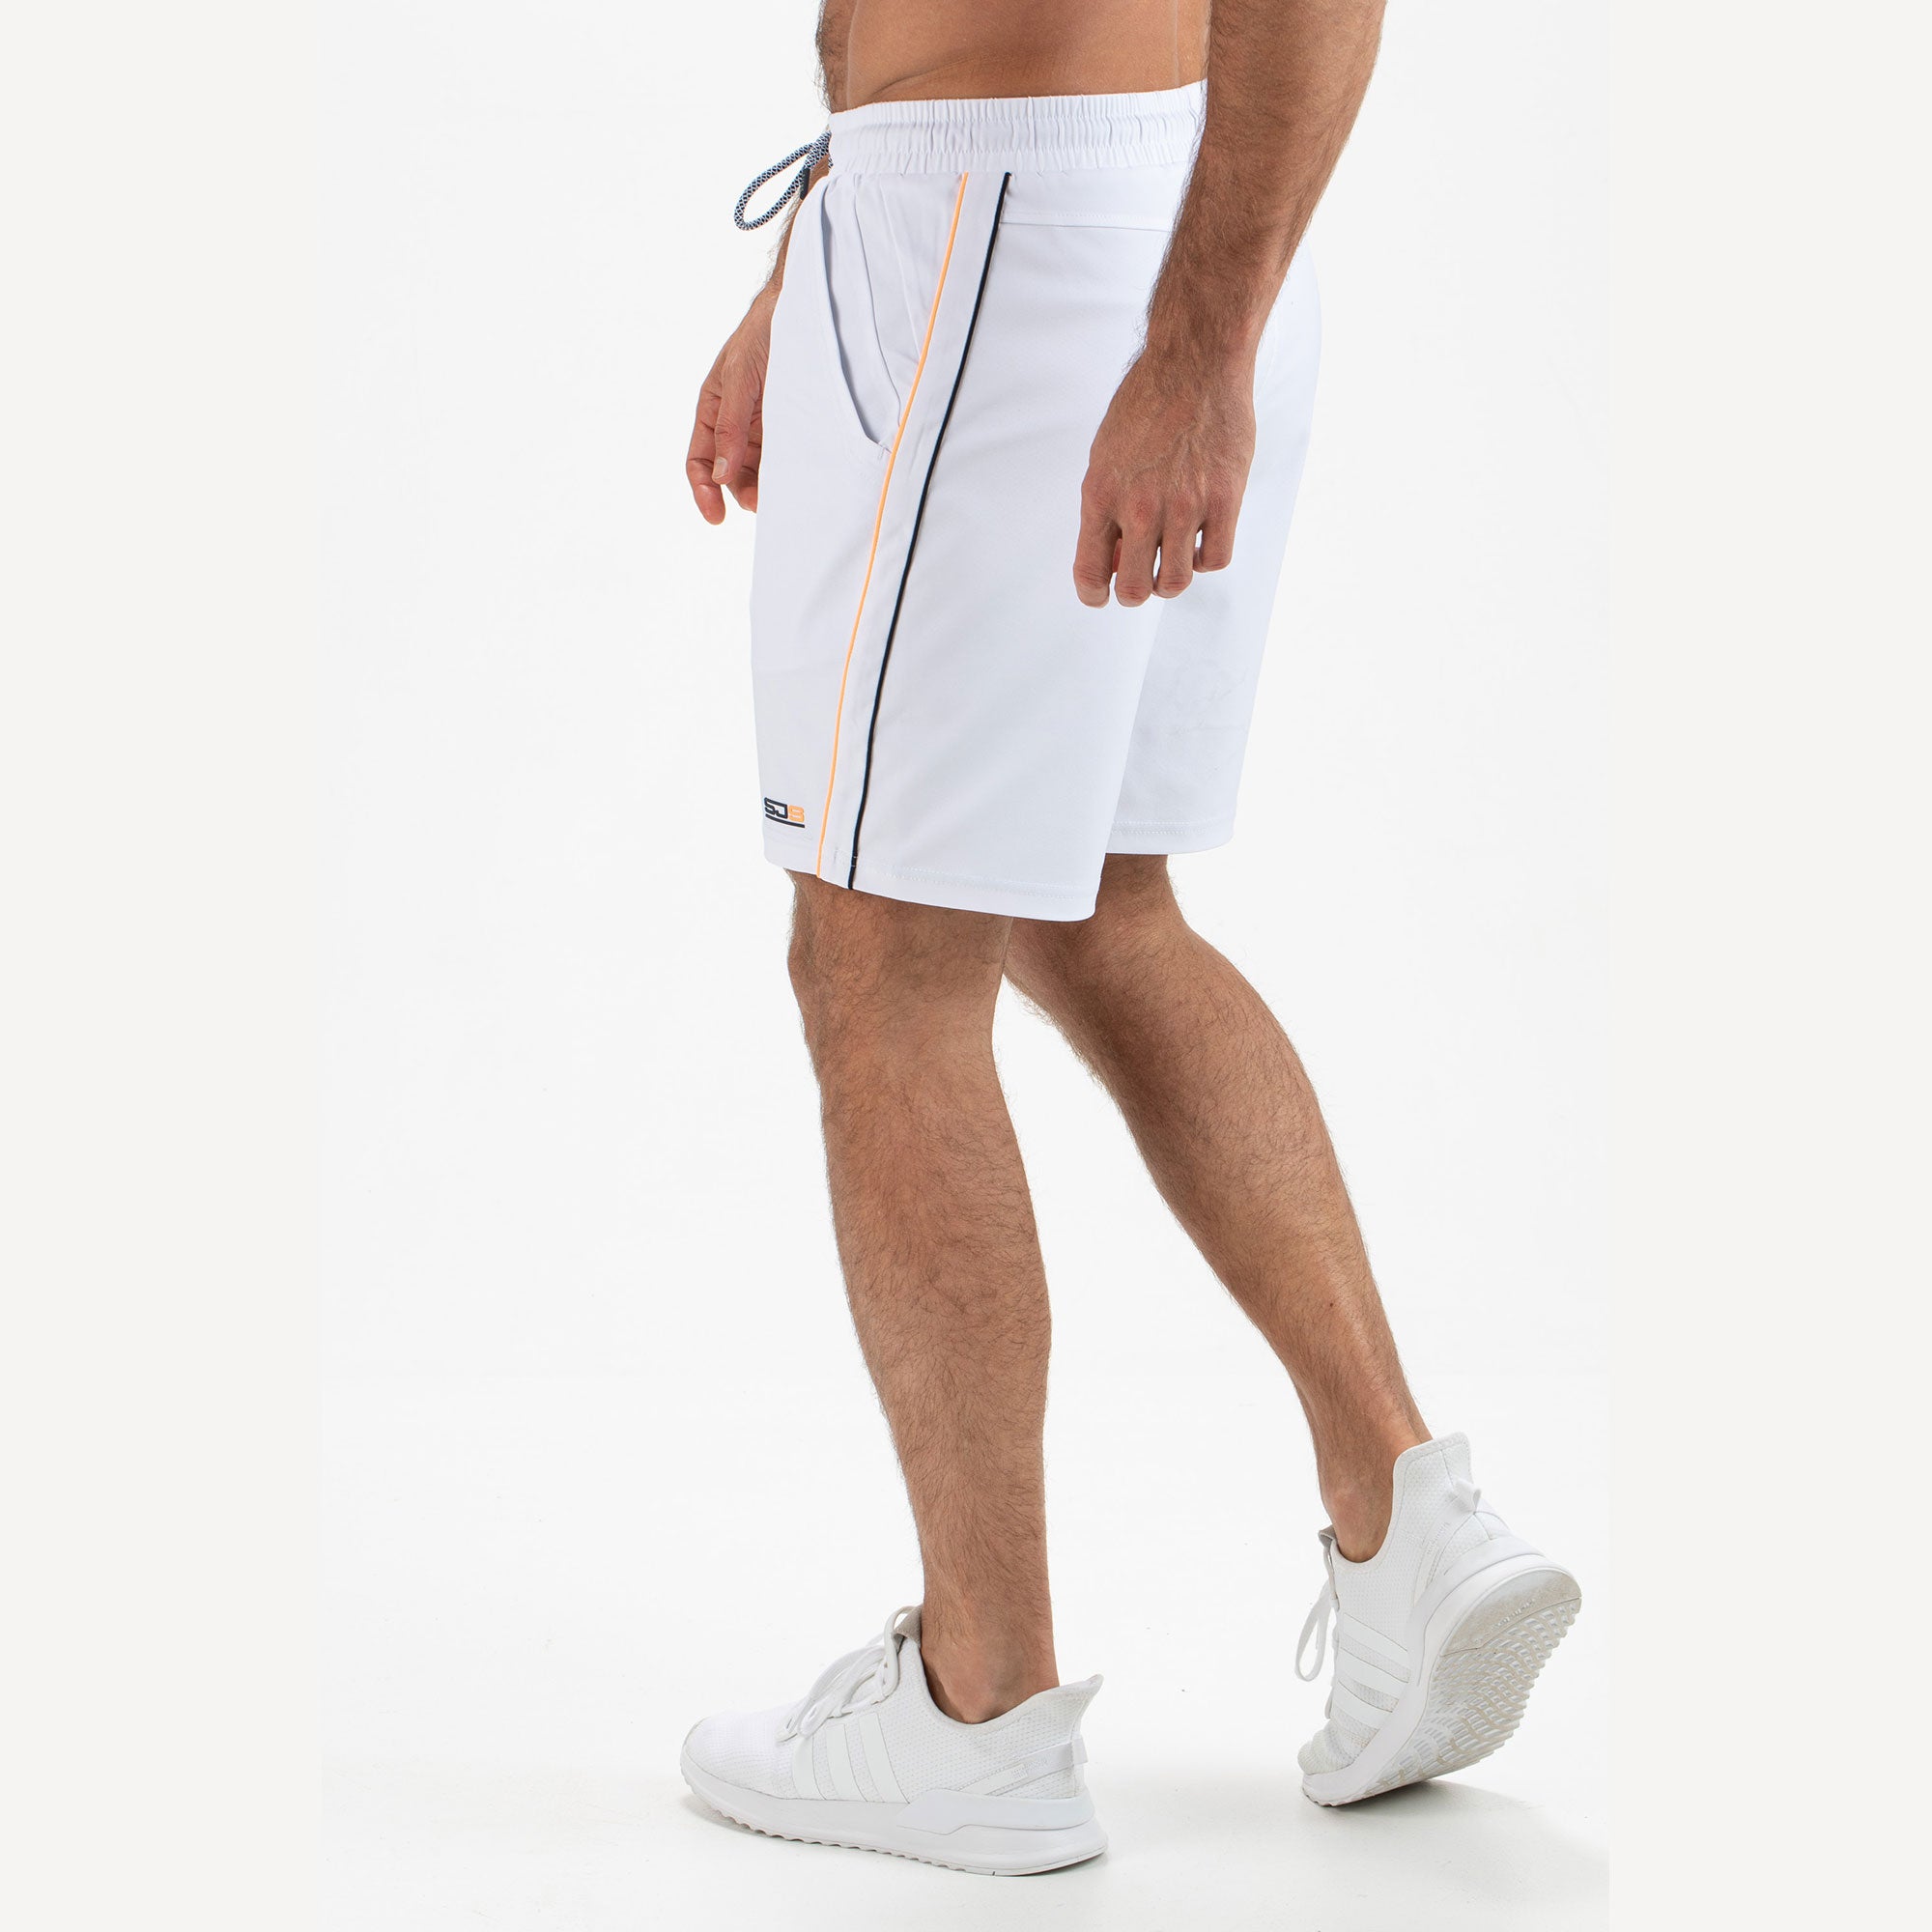 Sjeng Sports Marino Men's Tennis Shorts White (2)